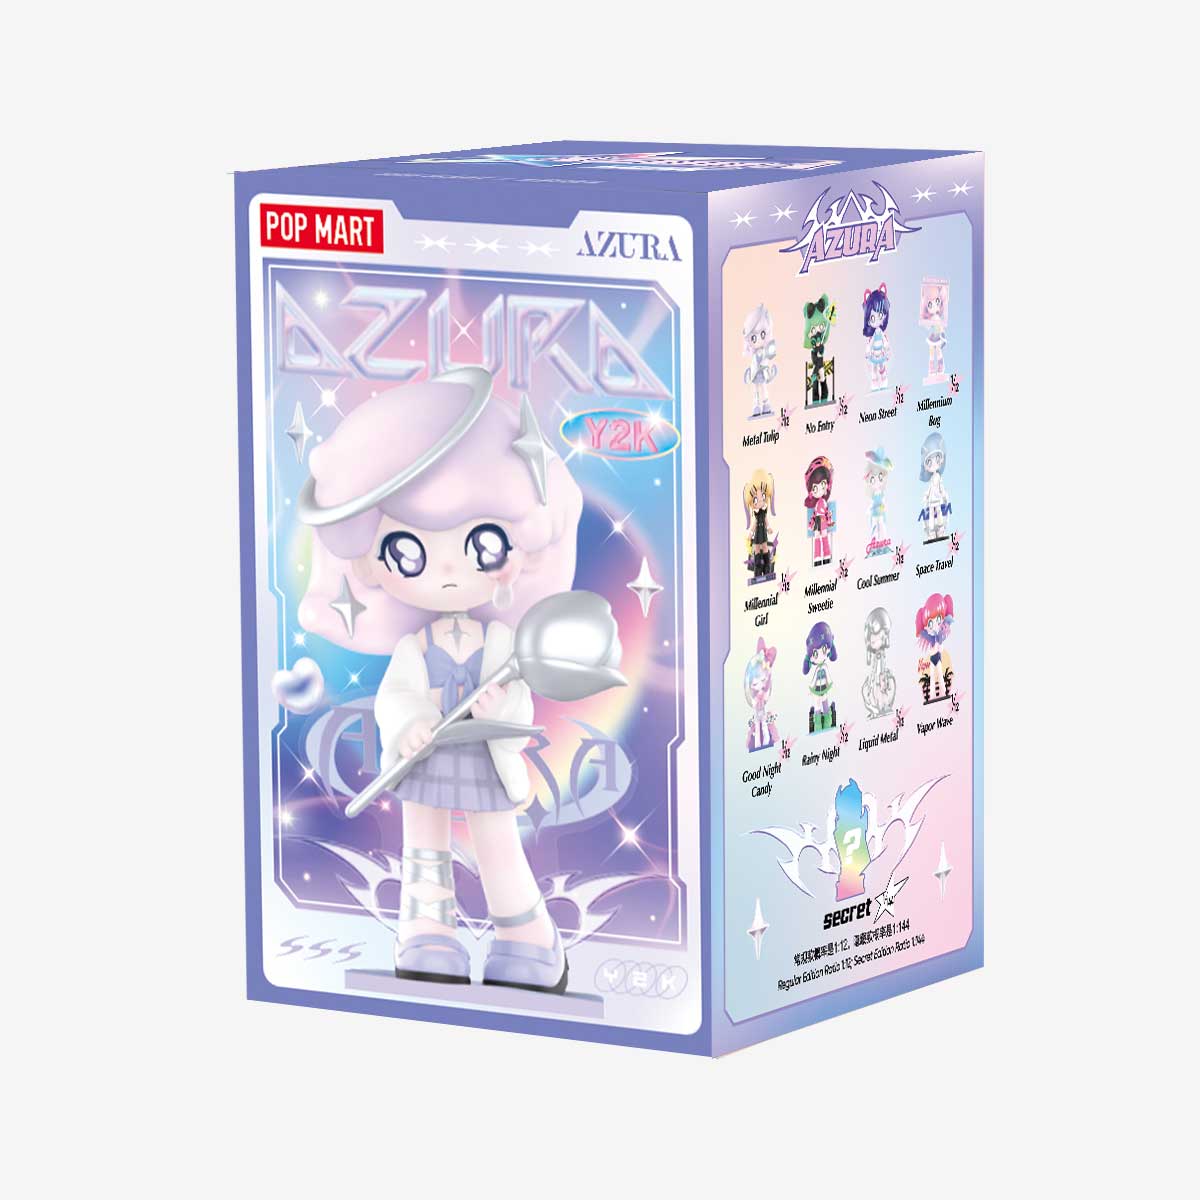 AZURA Y2K Series Figures - POP MART (Taiwan, China)